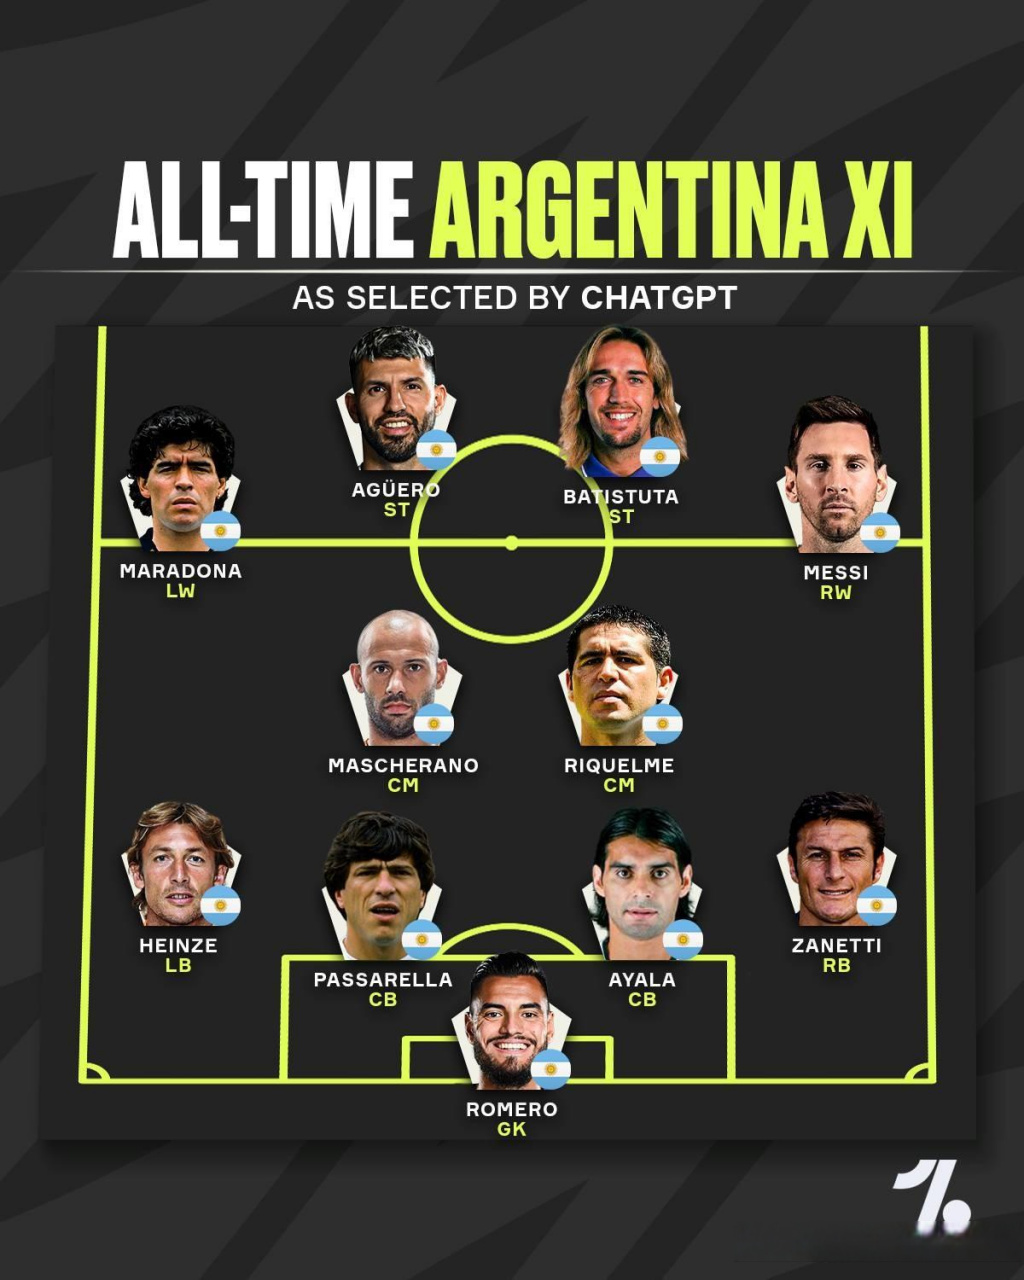 chatgpt排出的阿根廷历史最佳阵容,去年夺冠阵容里只有梅西1人入选,你